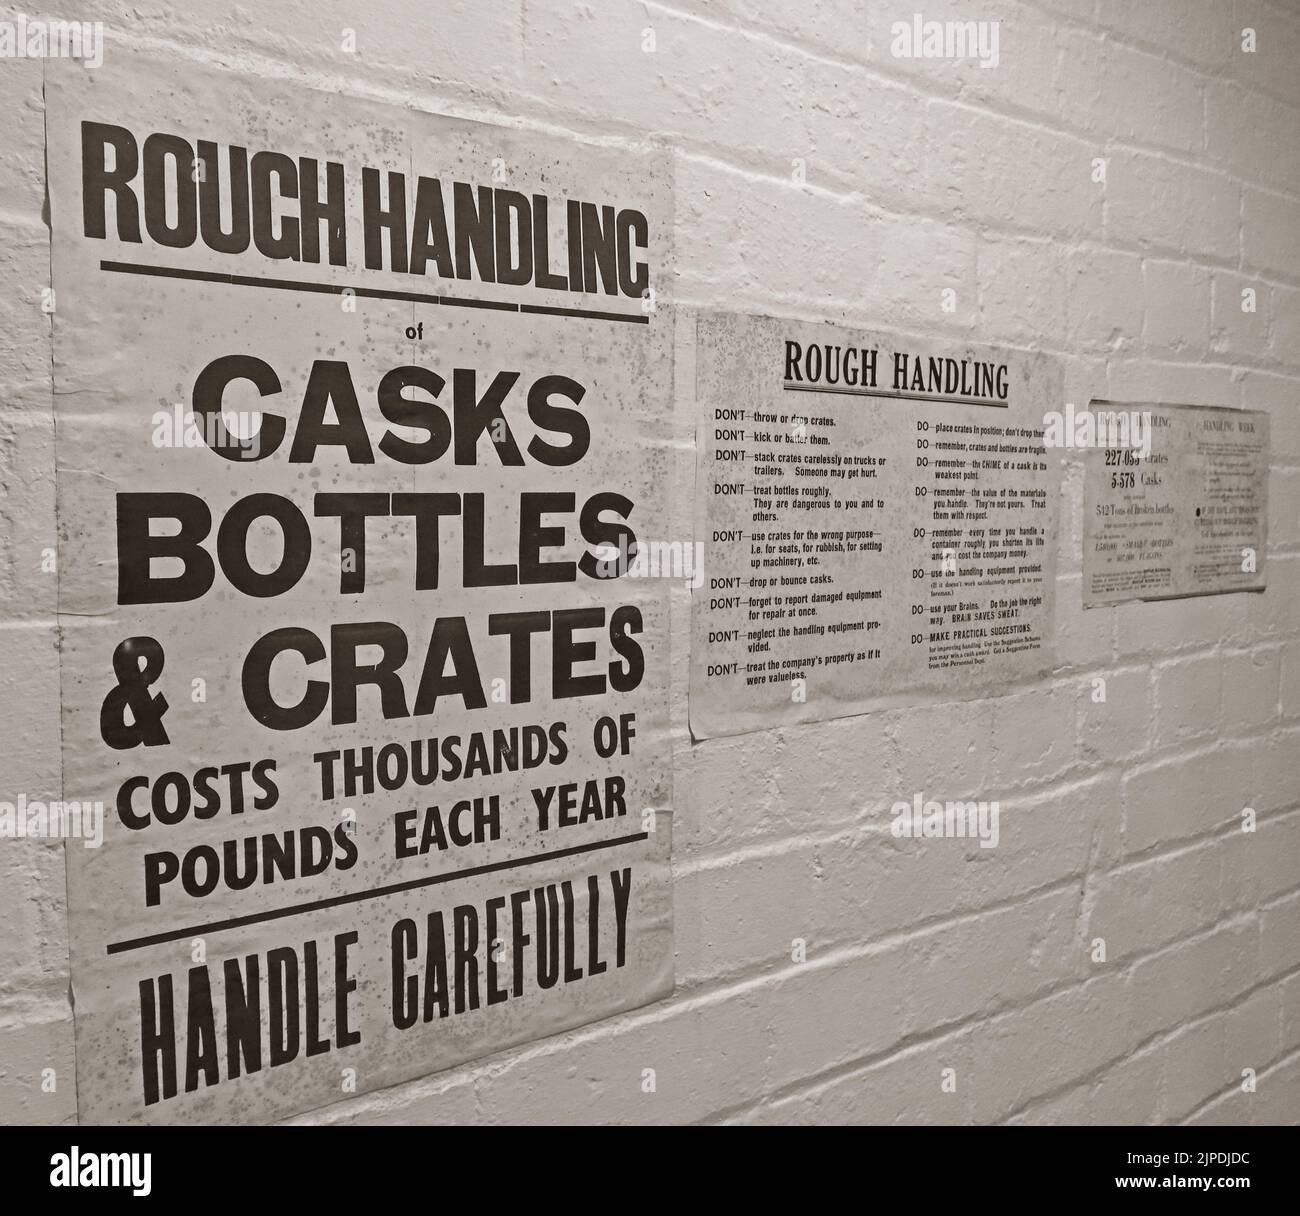 Rough Handling, warning factory poster - Handle Carefully Stock Photo